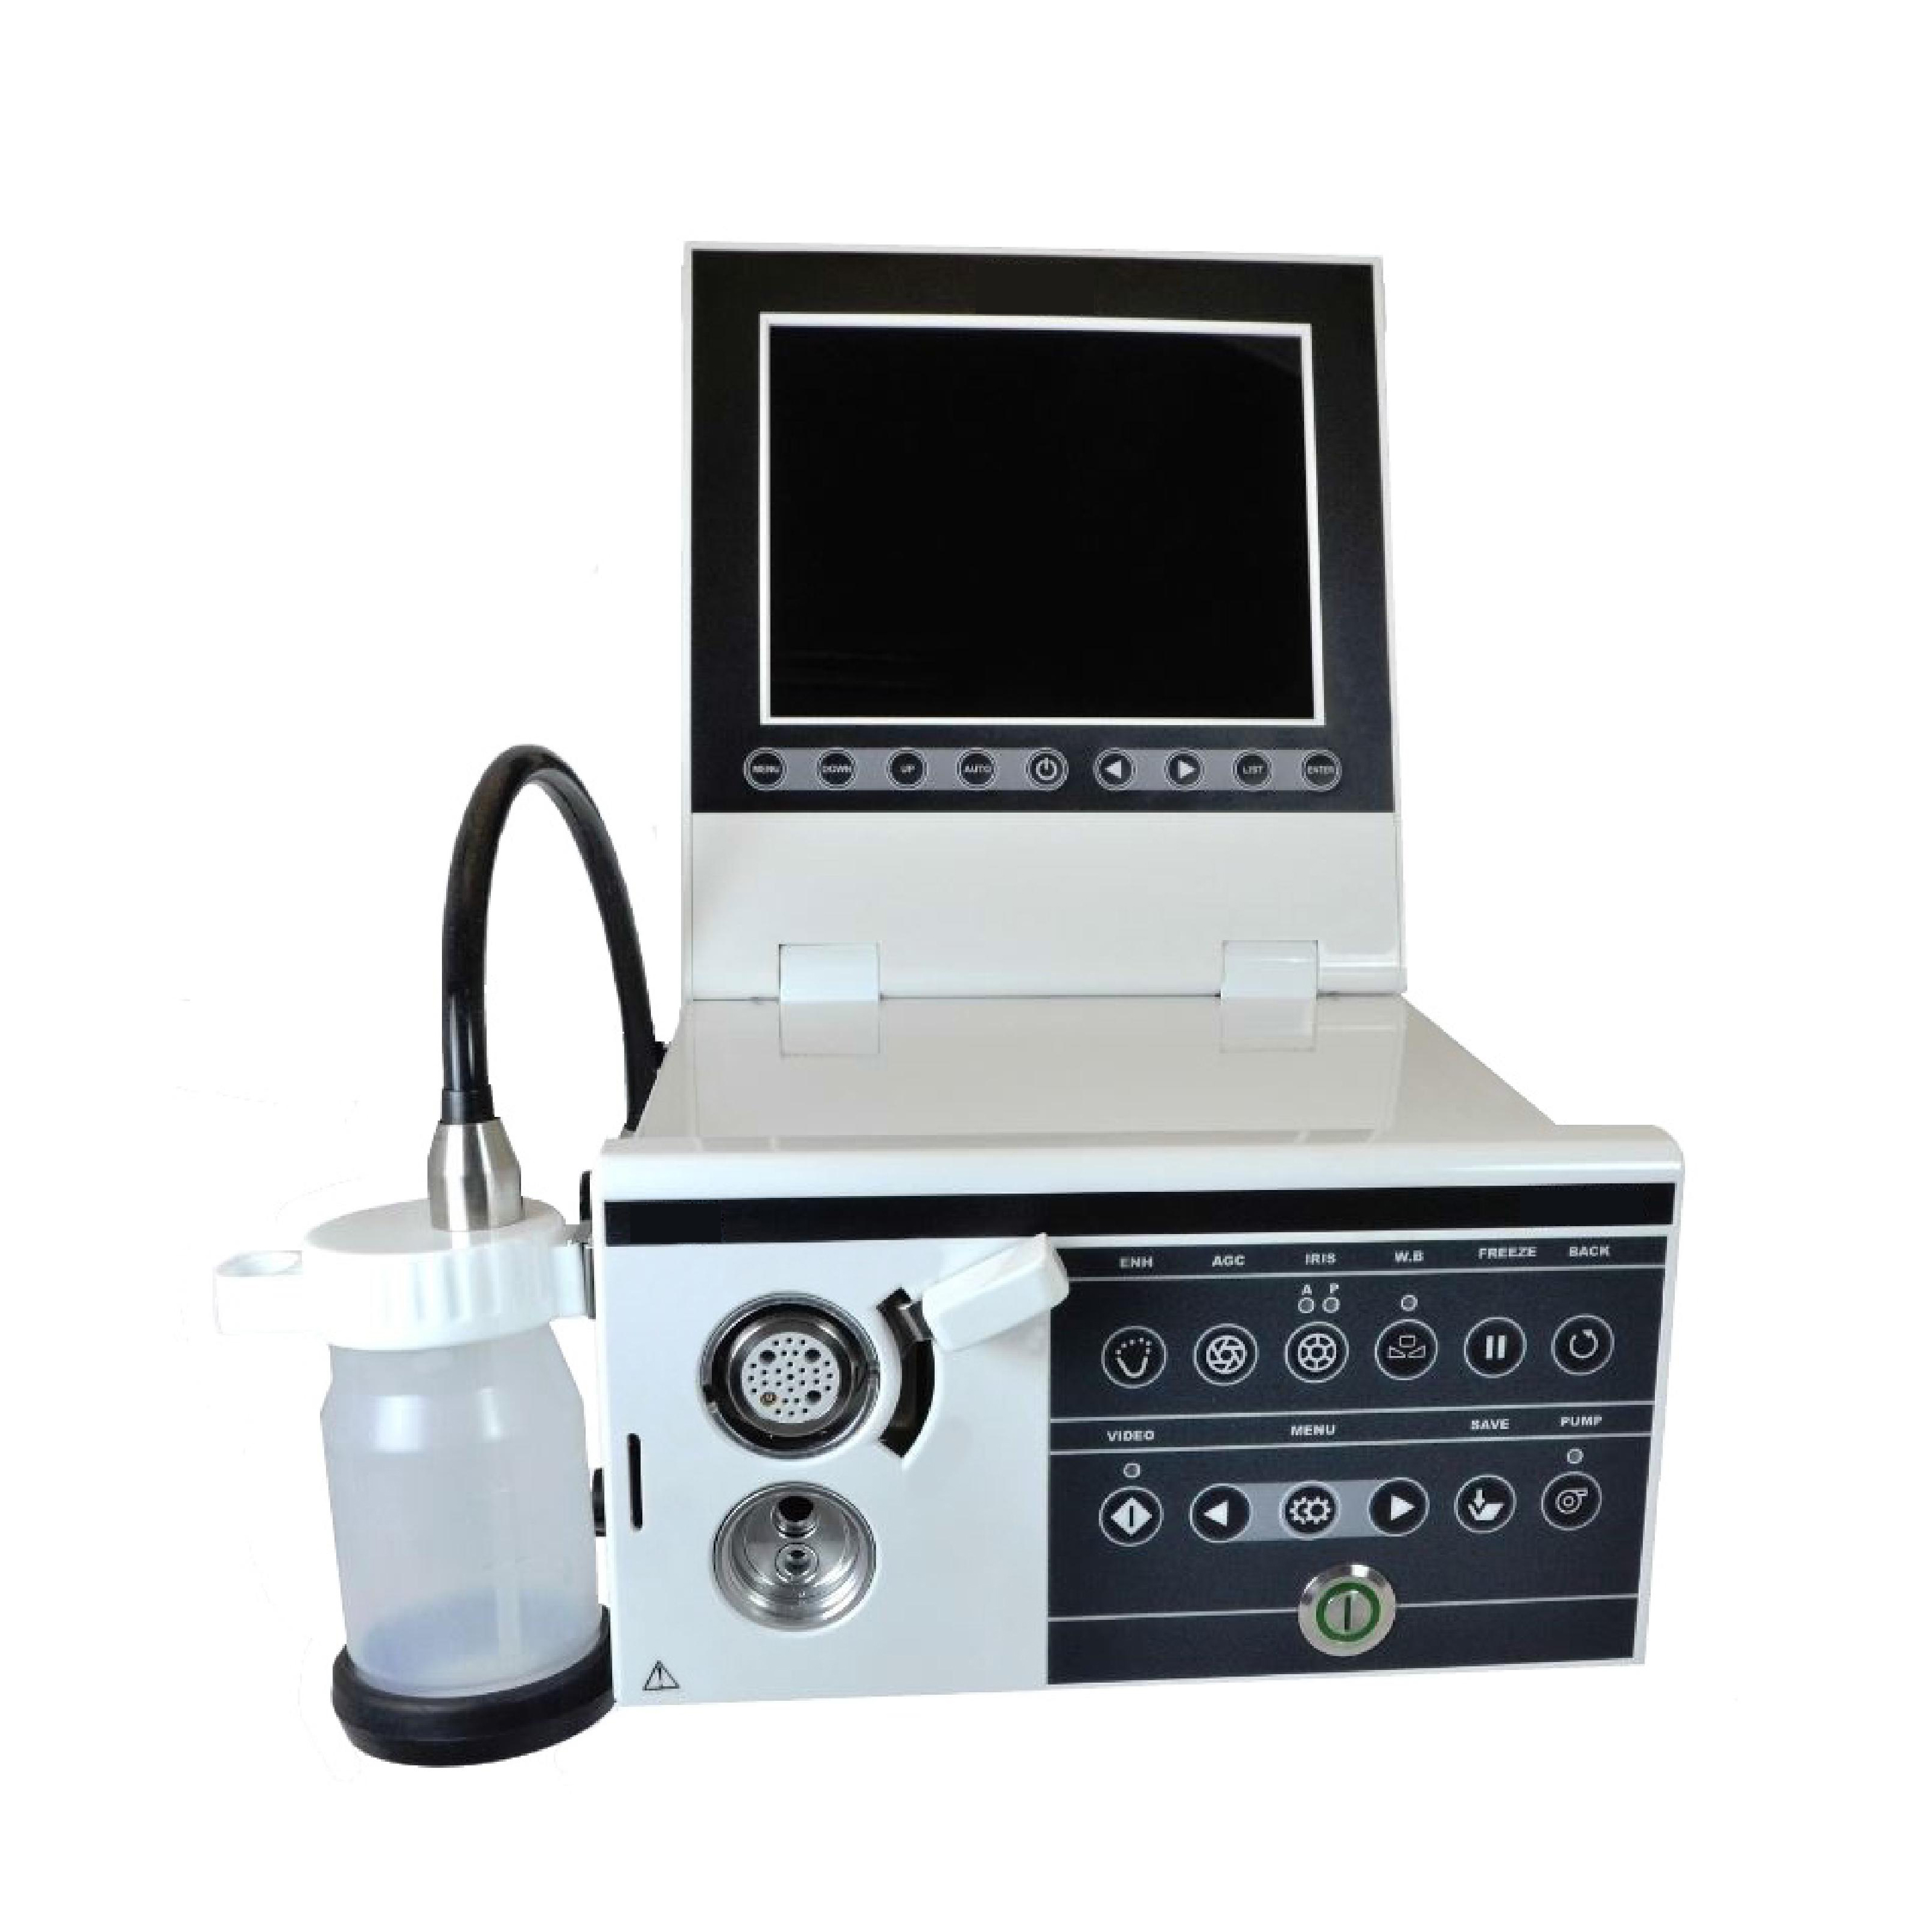 YSNJ-330VET-P Portable All-In-One Animal Endoscope System